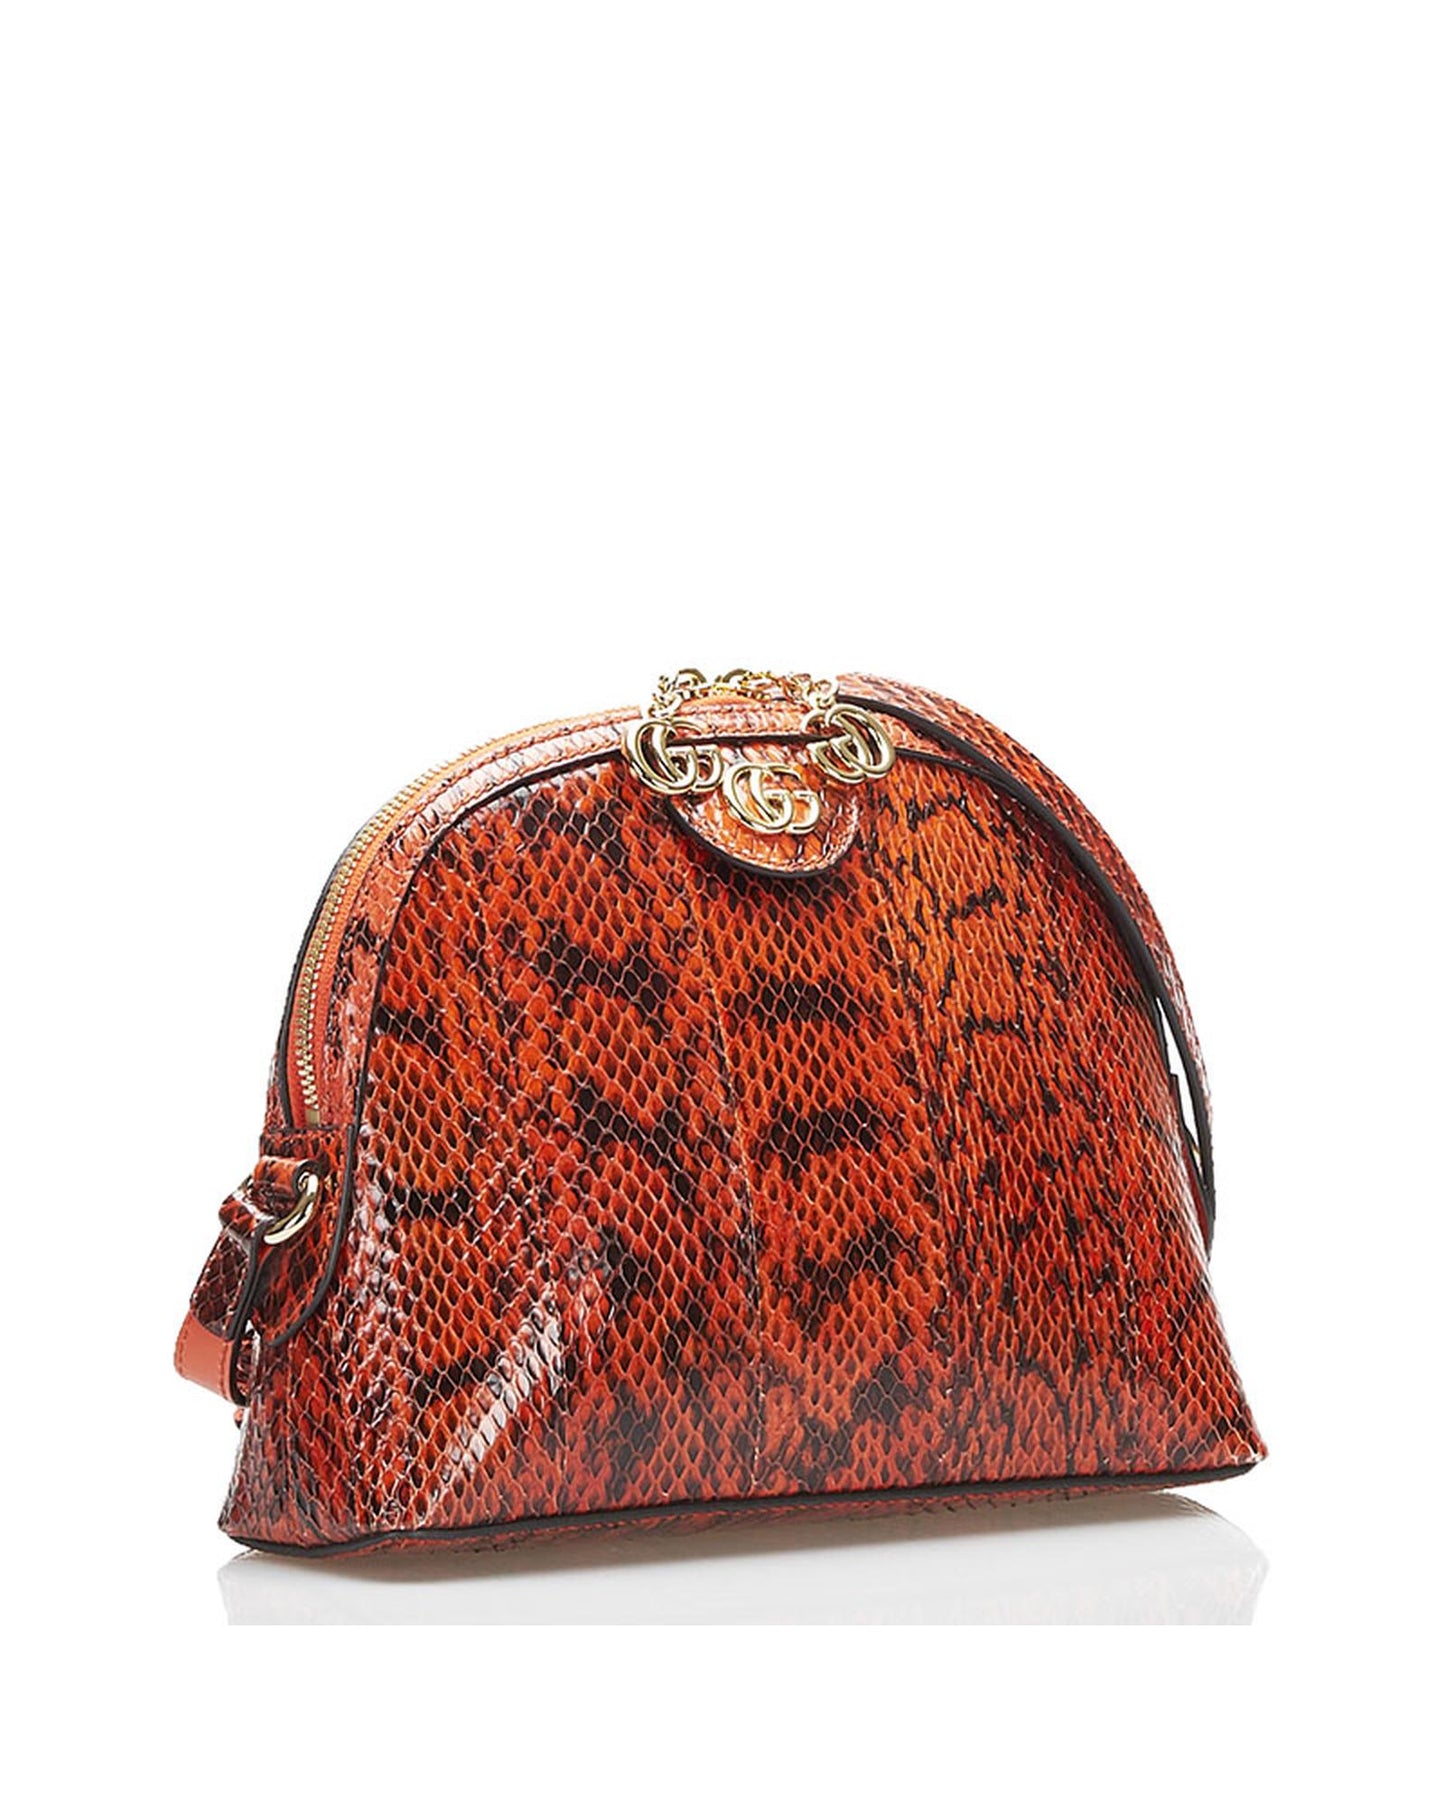 Gucci Women's Small Ophidia Shoulder Bag in Orange in Orange